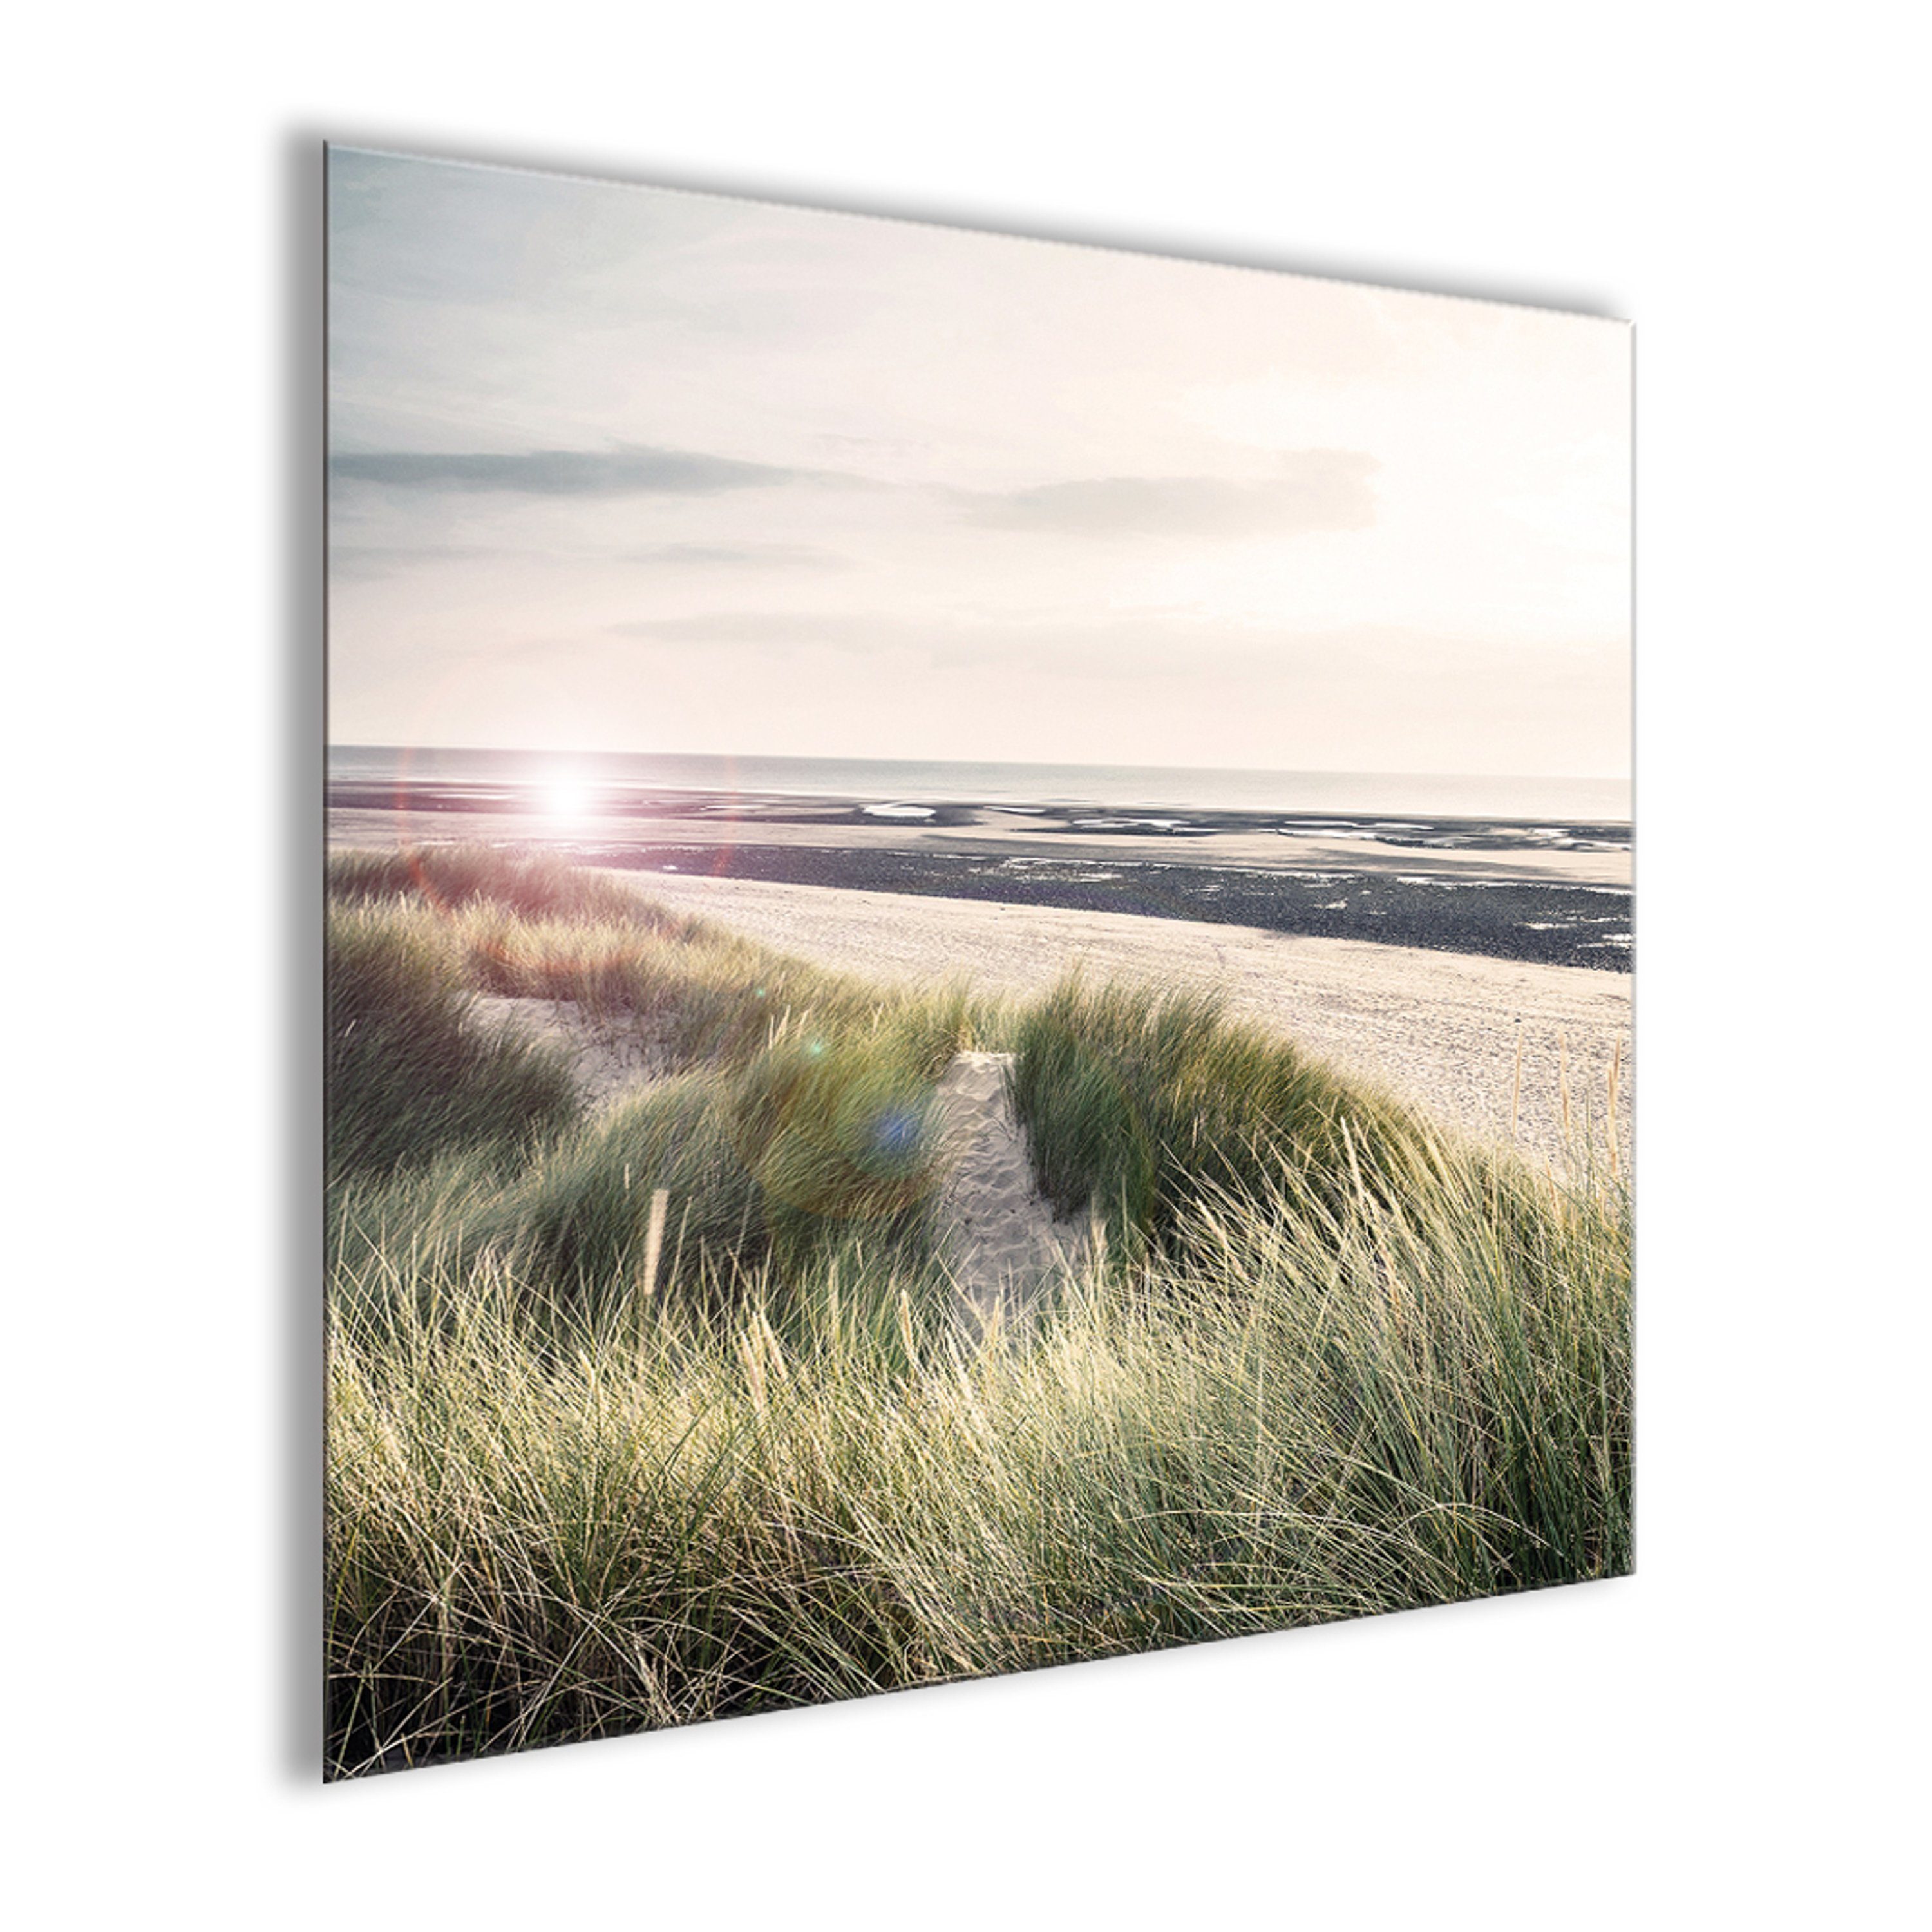 artissimo Glasbild Glasbild 50x50cm Bild aus Glas Landschaft maritim Meer Strand Düne